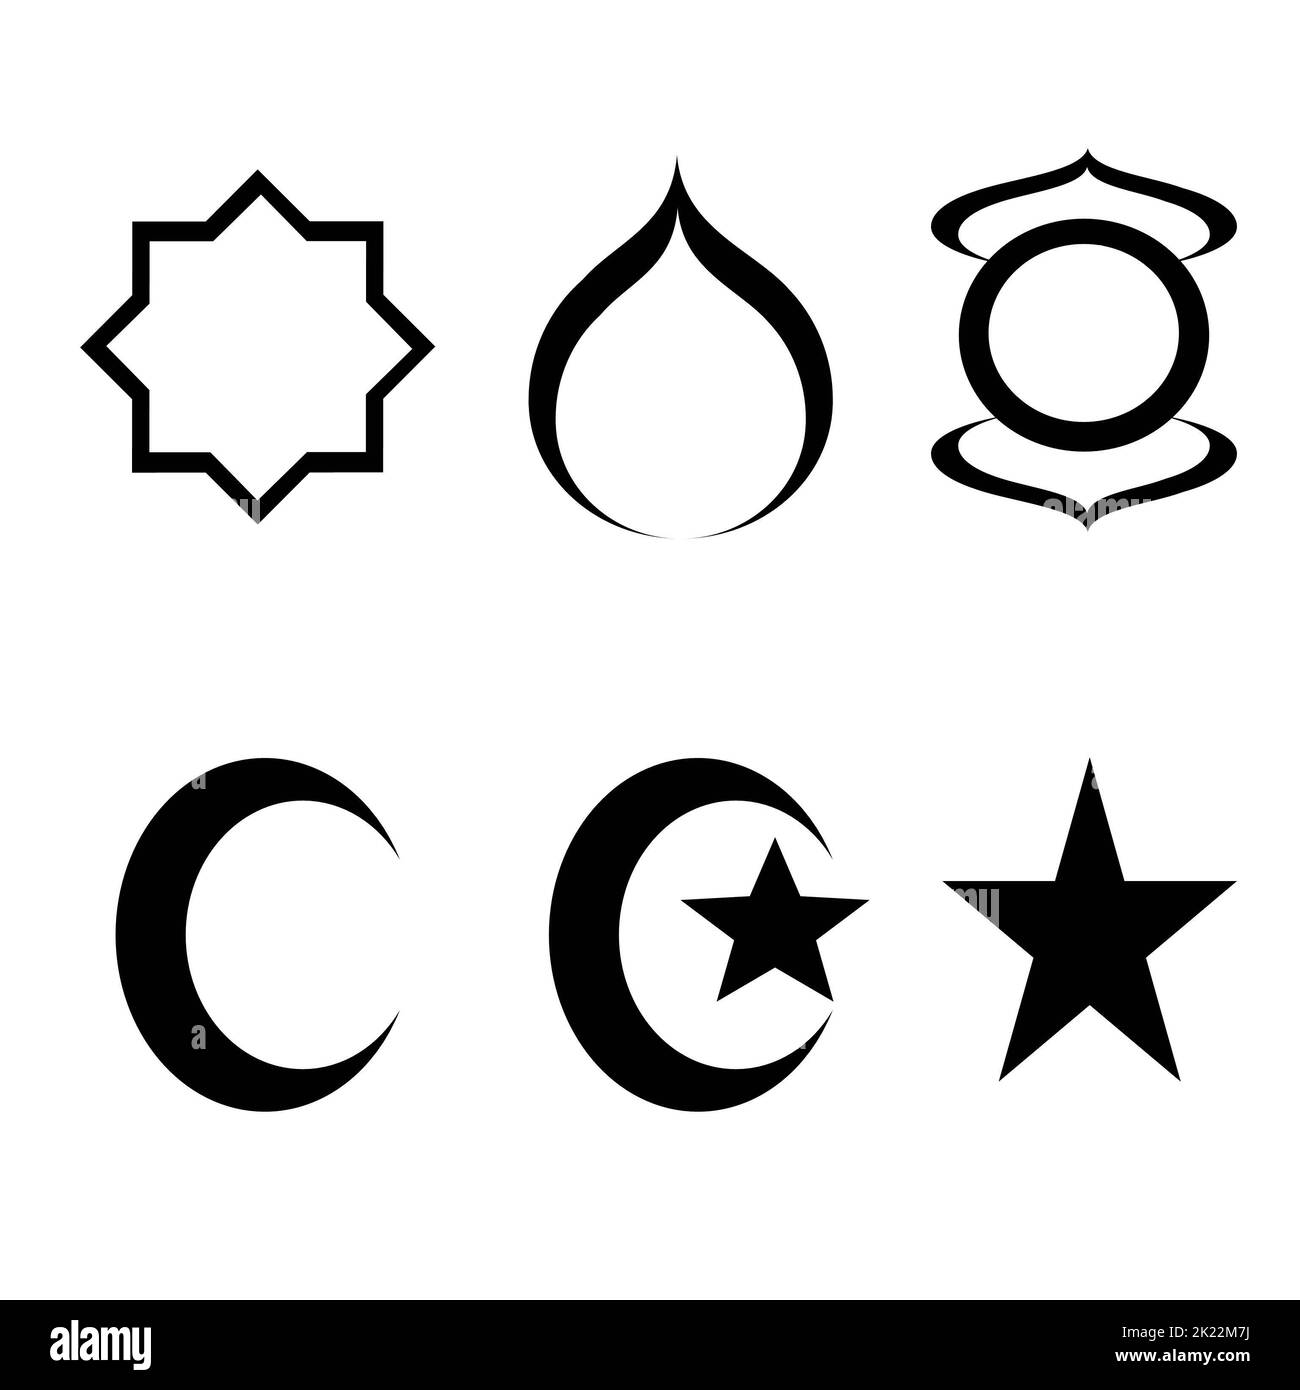 islamic vector design for graphic design Stock Photo